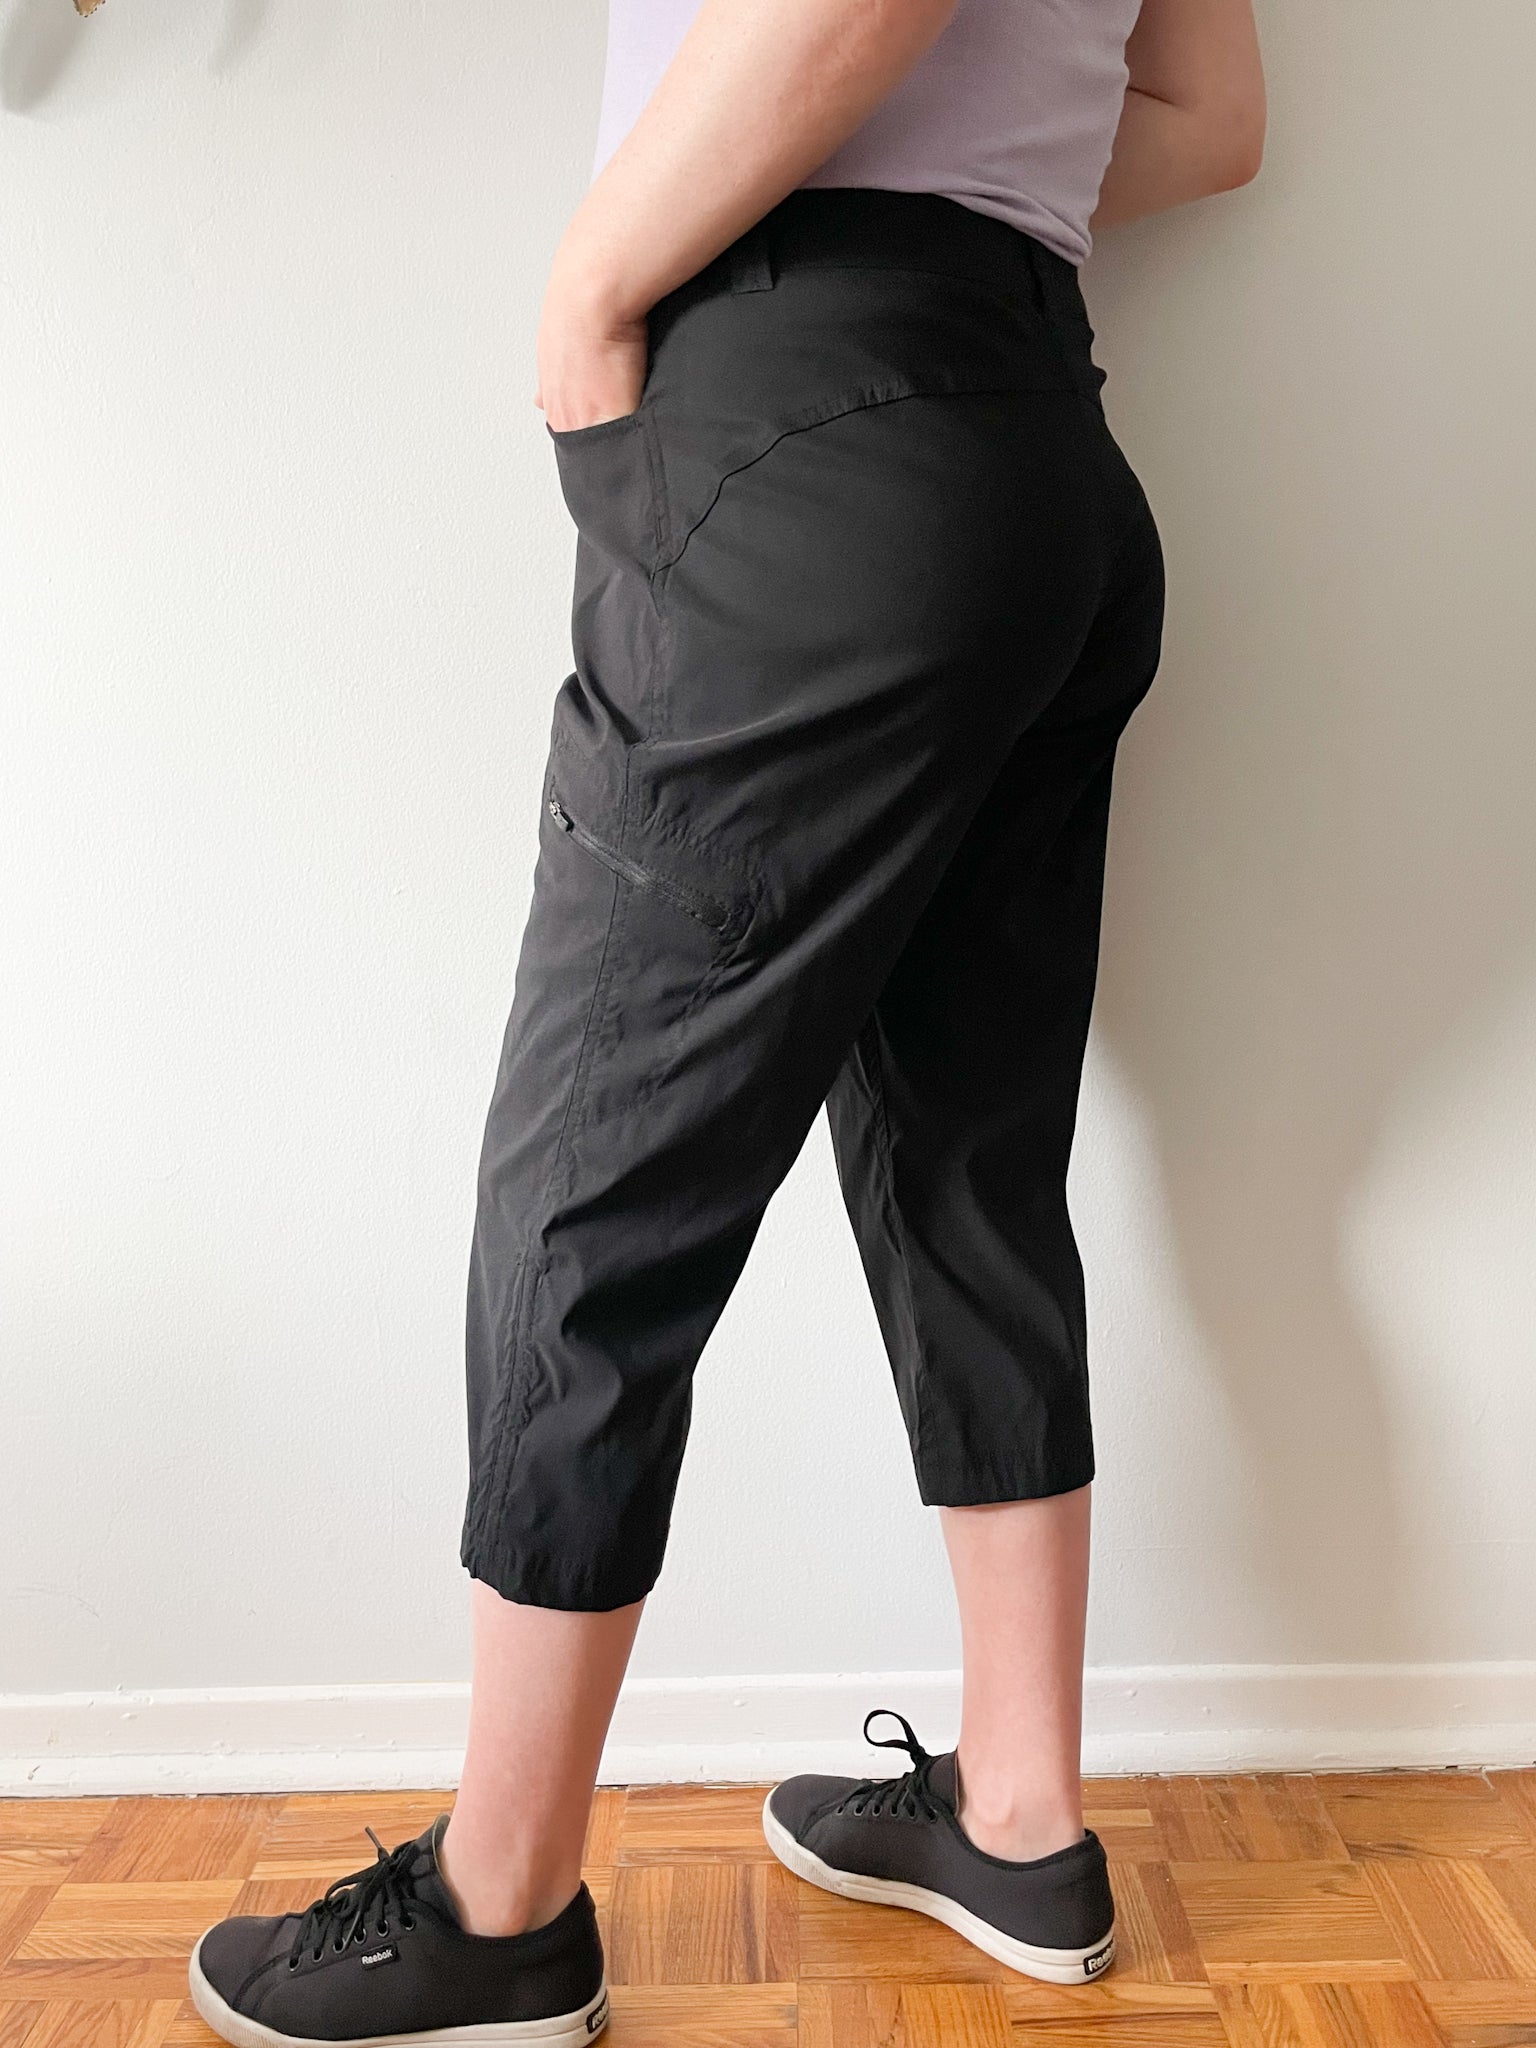 Styles of Women's Pants - Eddiebauer